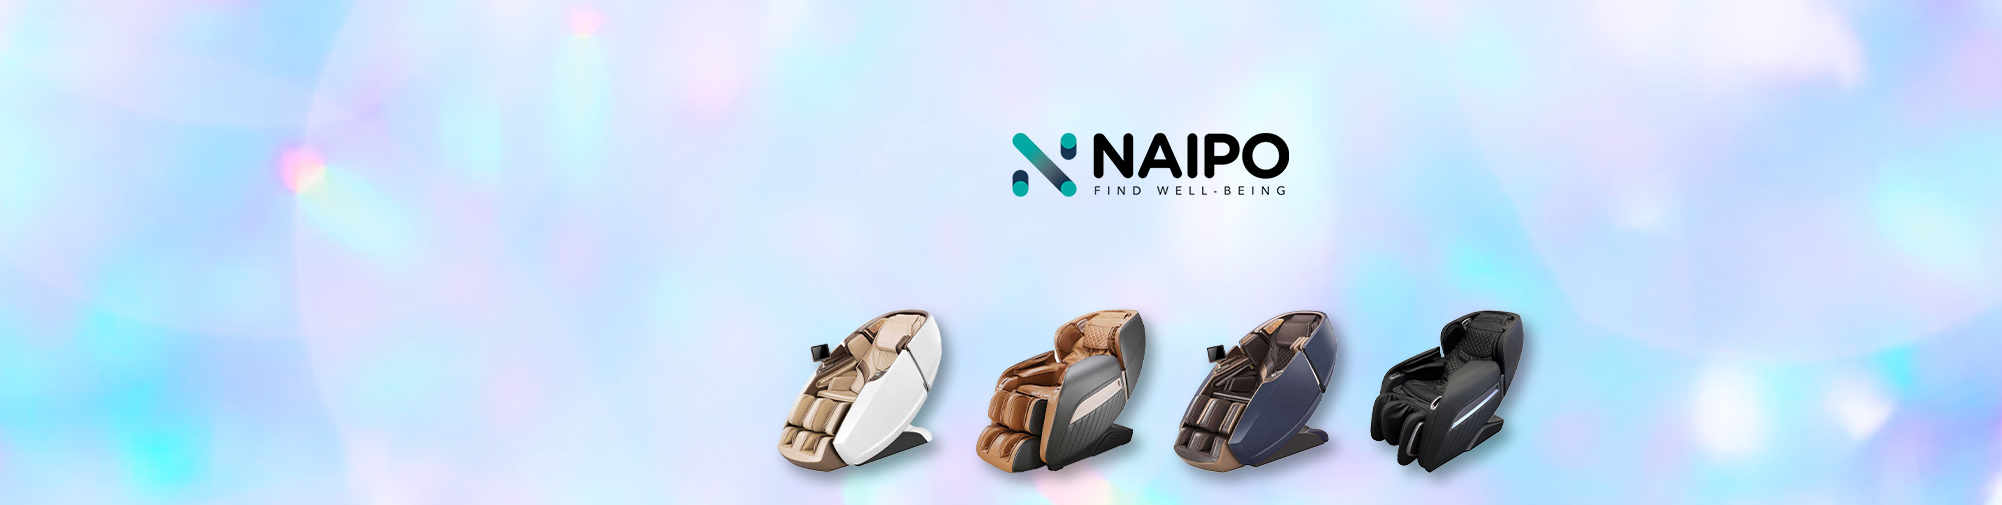 NAIPO - 面向全世界的按摩产品 | 按摩椅世界